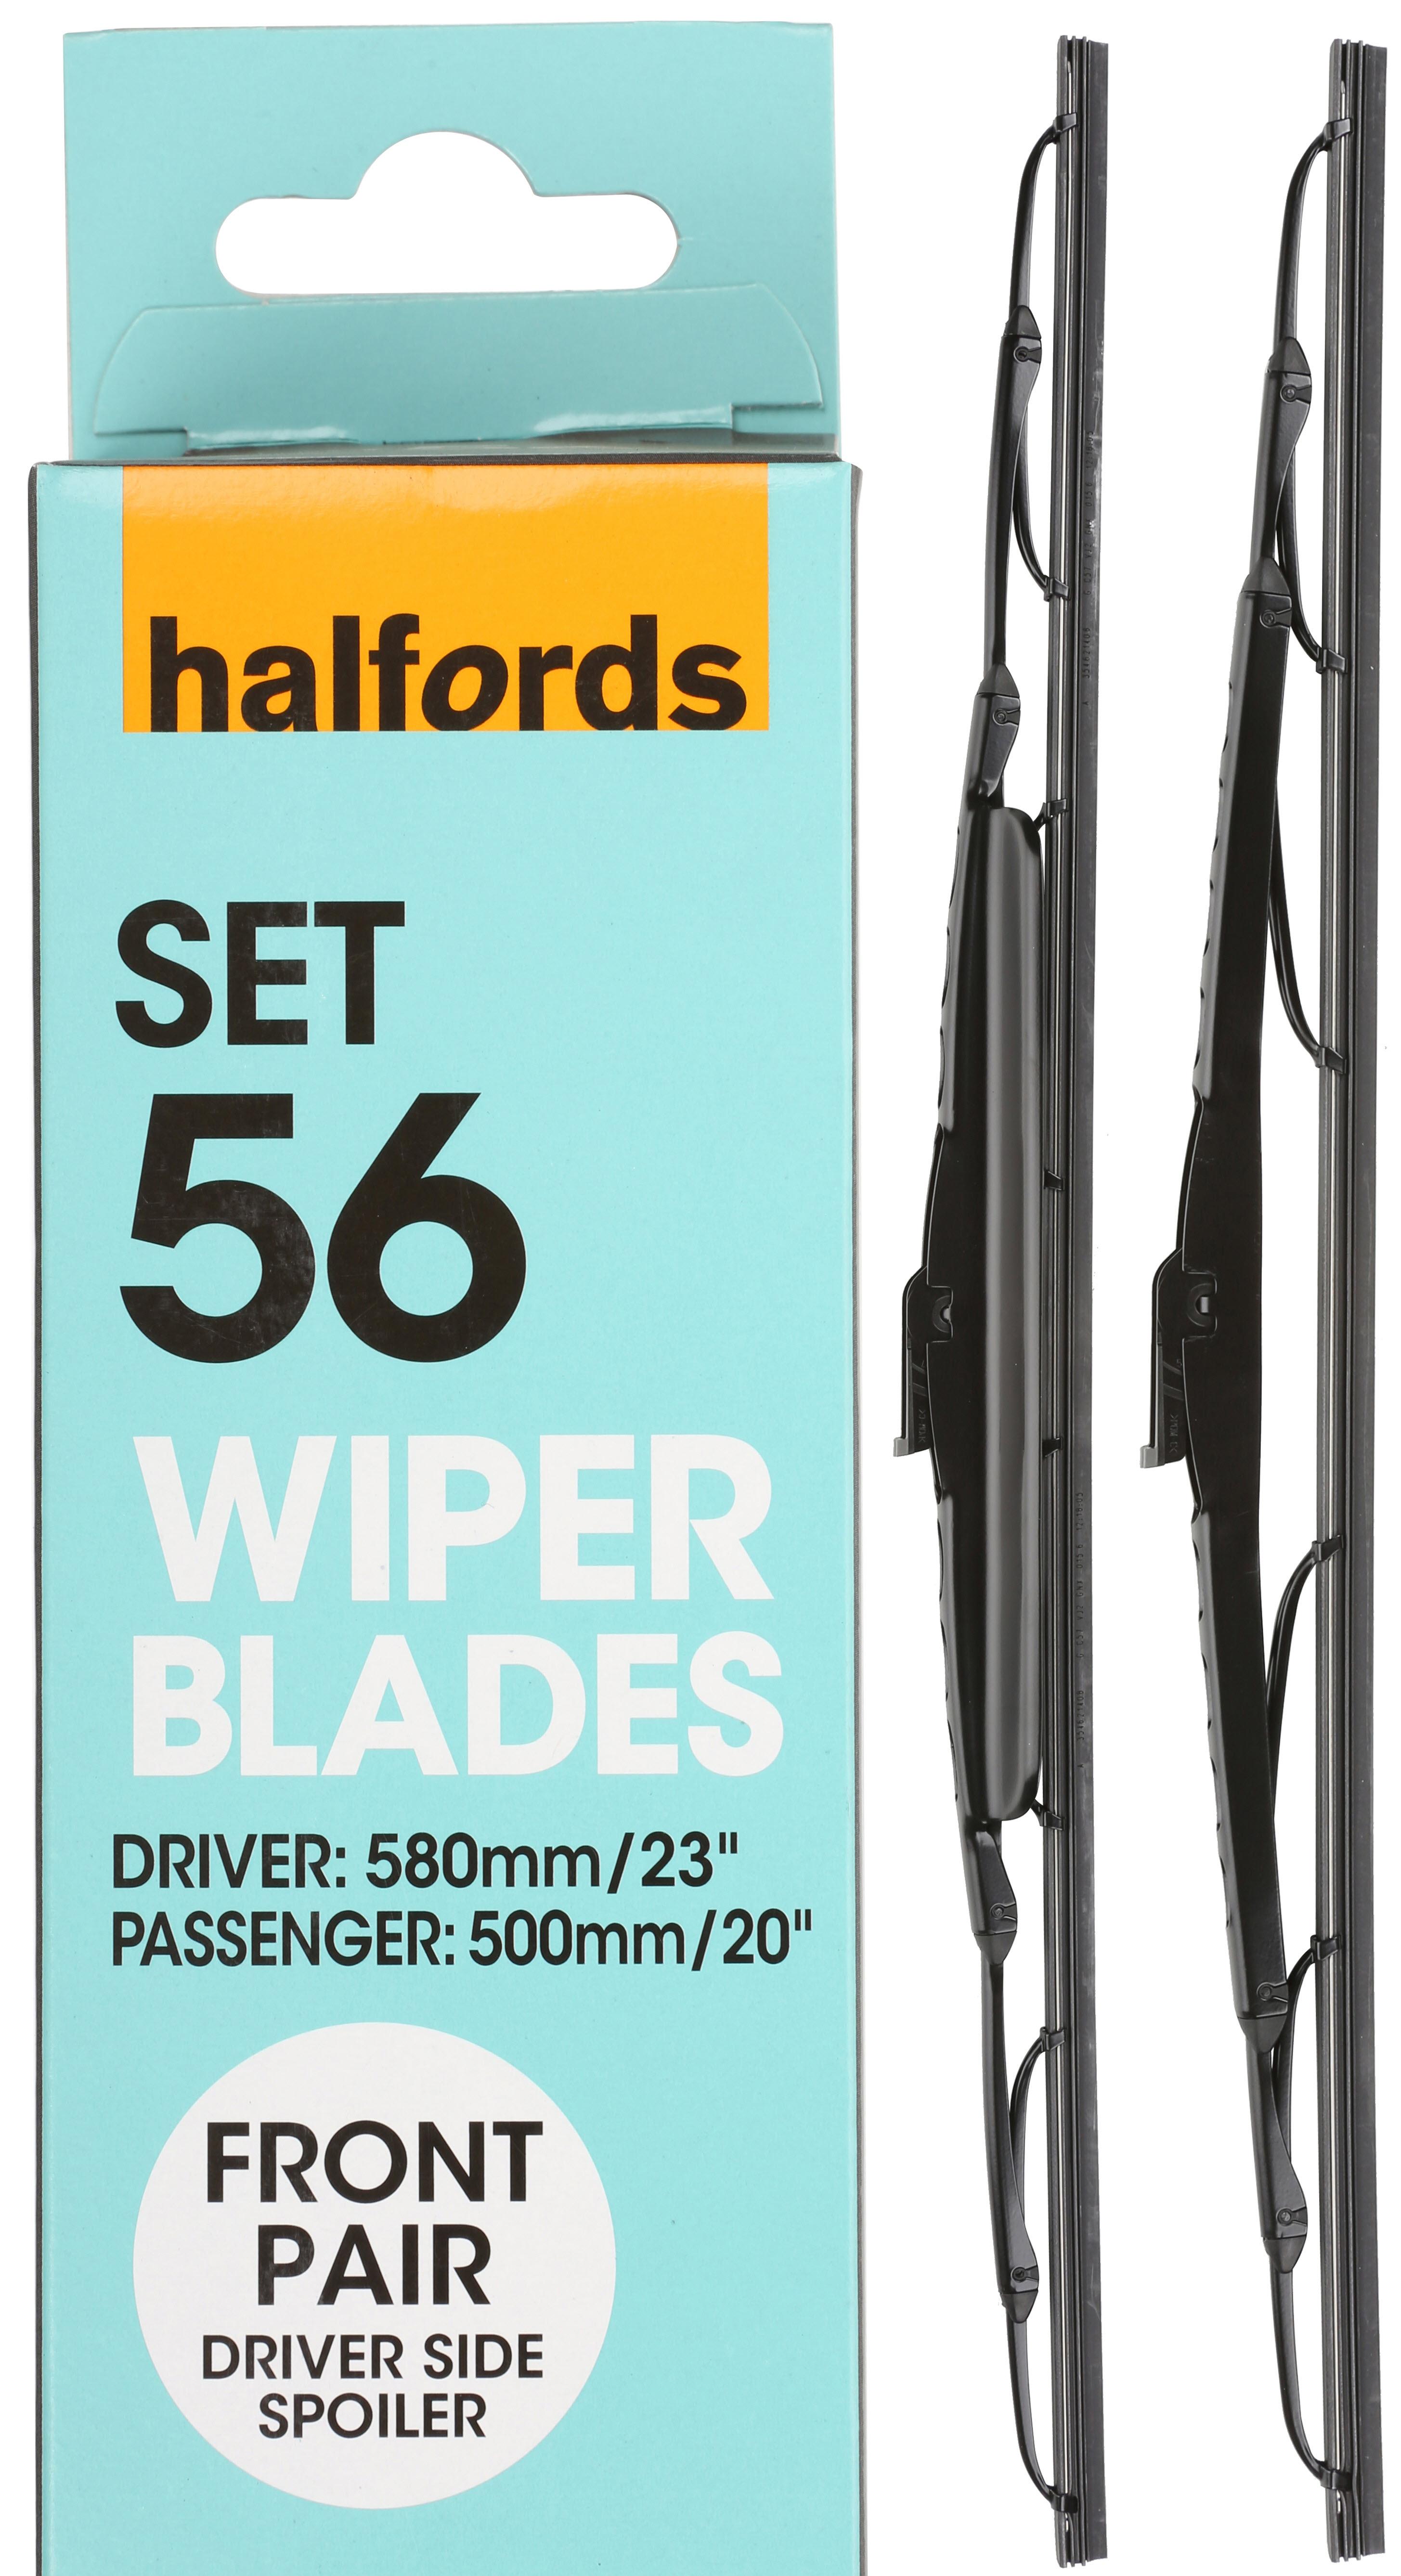 Halfords Set 56 Wiper Blades - Front Pair